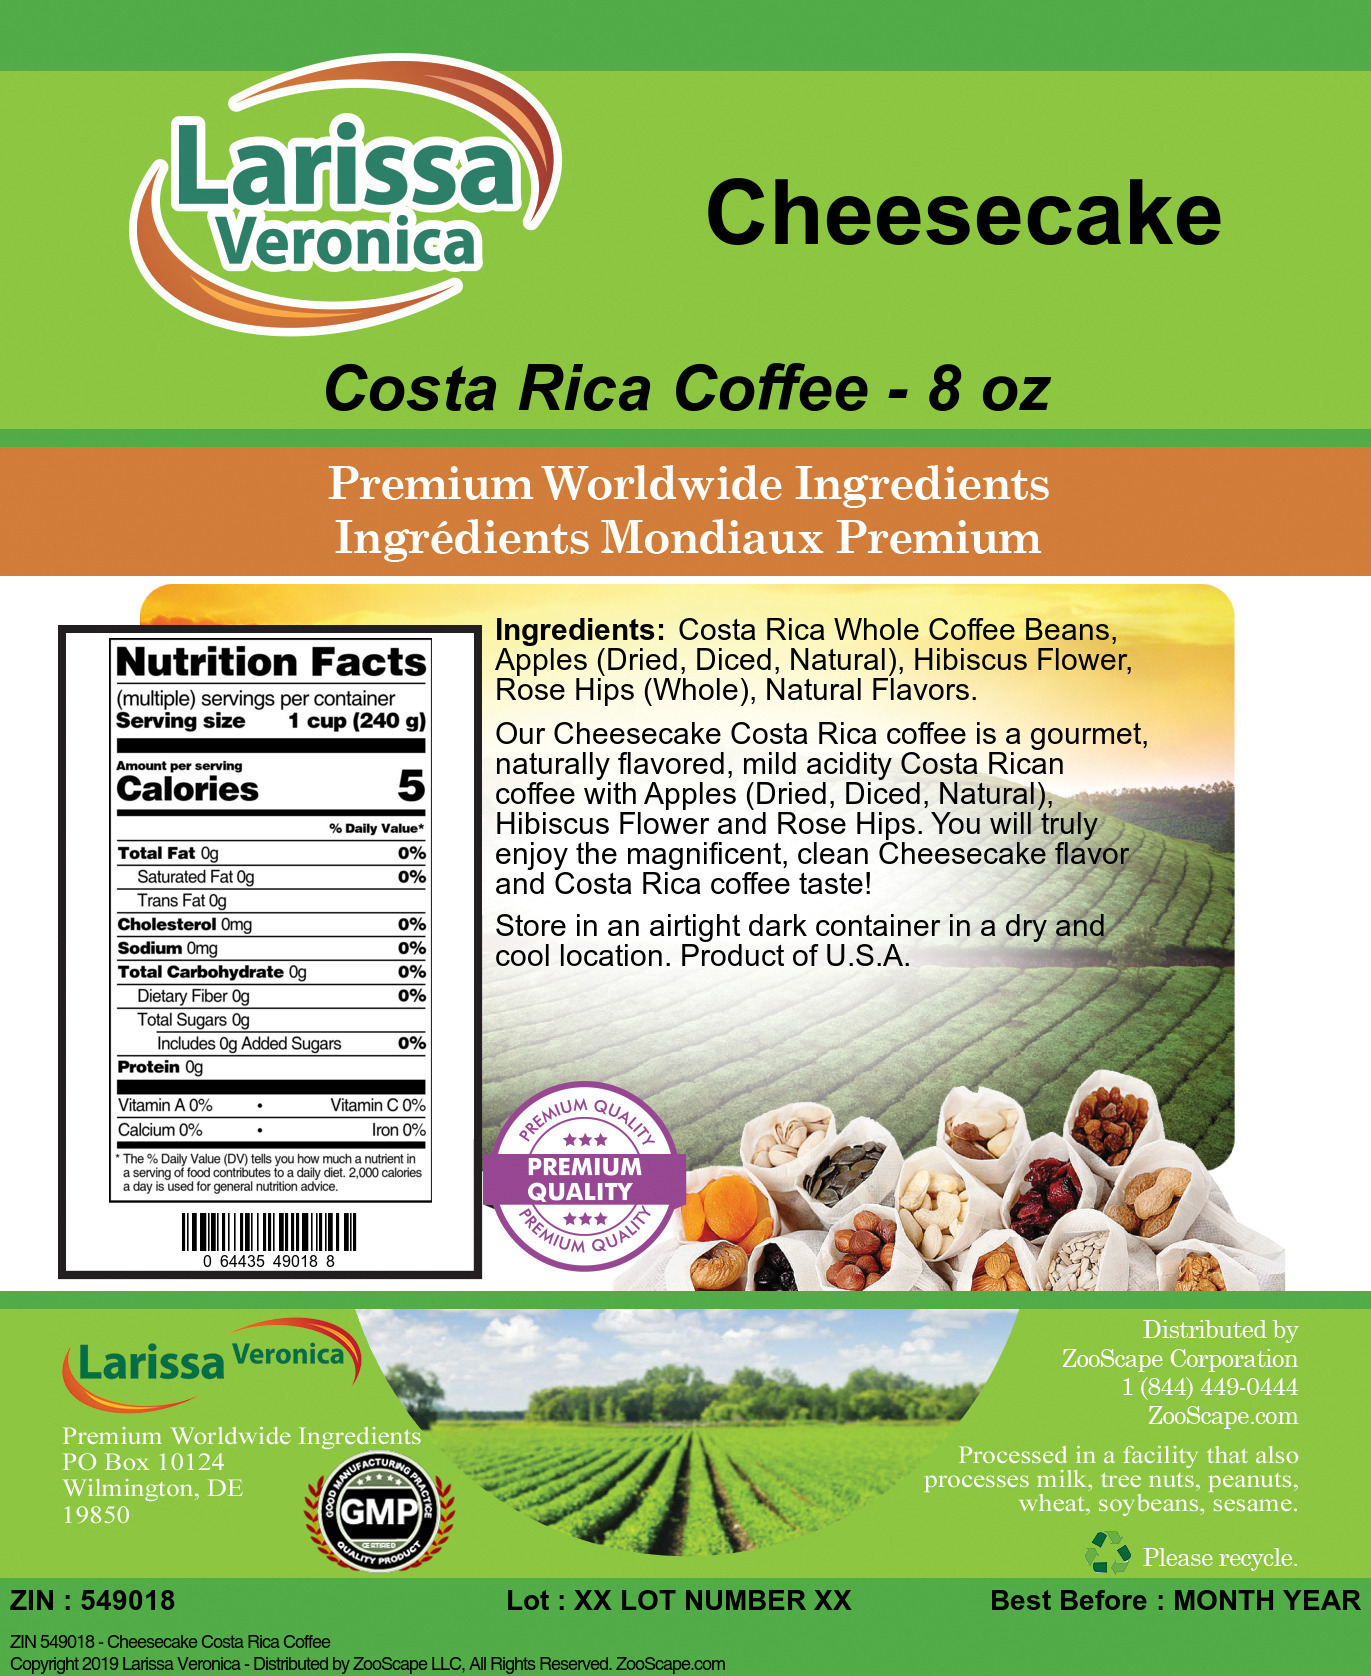 Cheesecake Costa Rica Coffee - Label